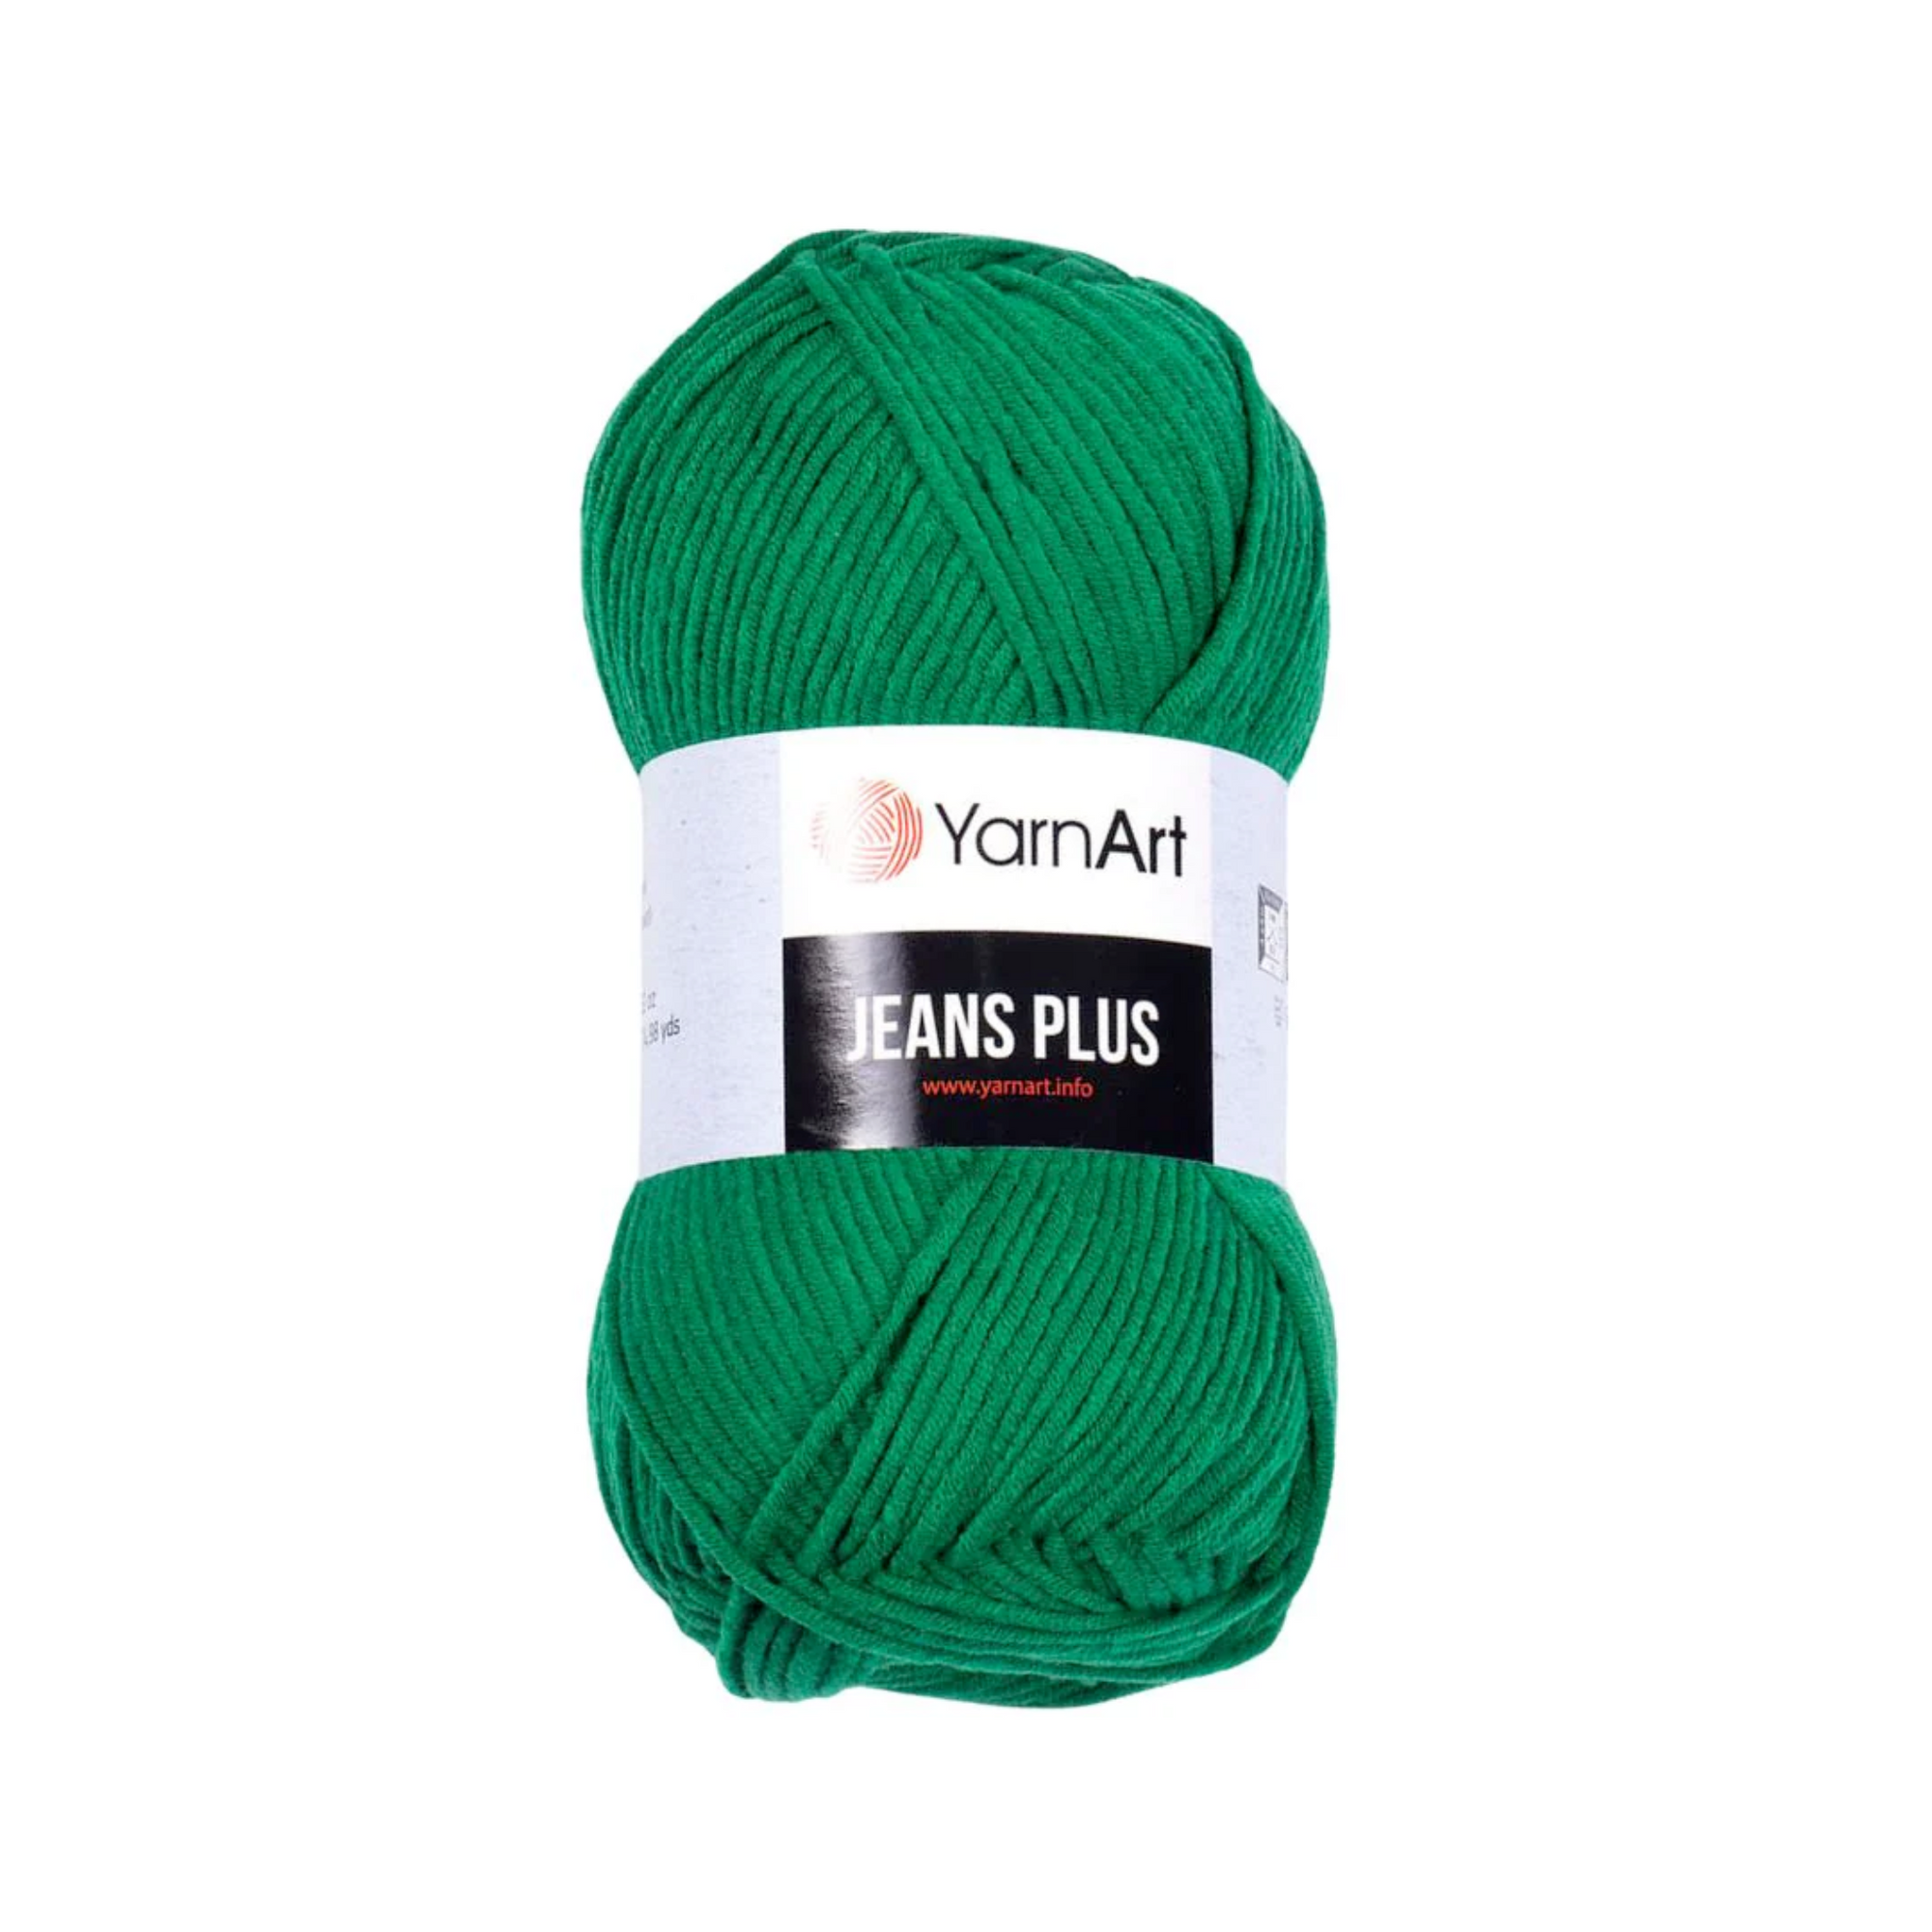 YarnArt Jean Plus Yarn, Emerald Green - 52